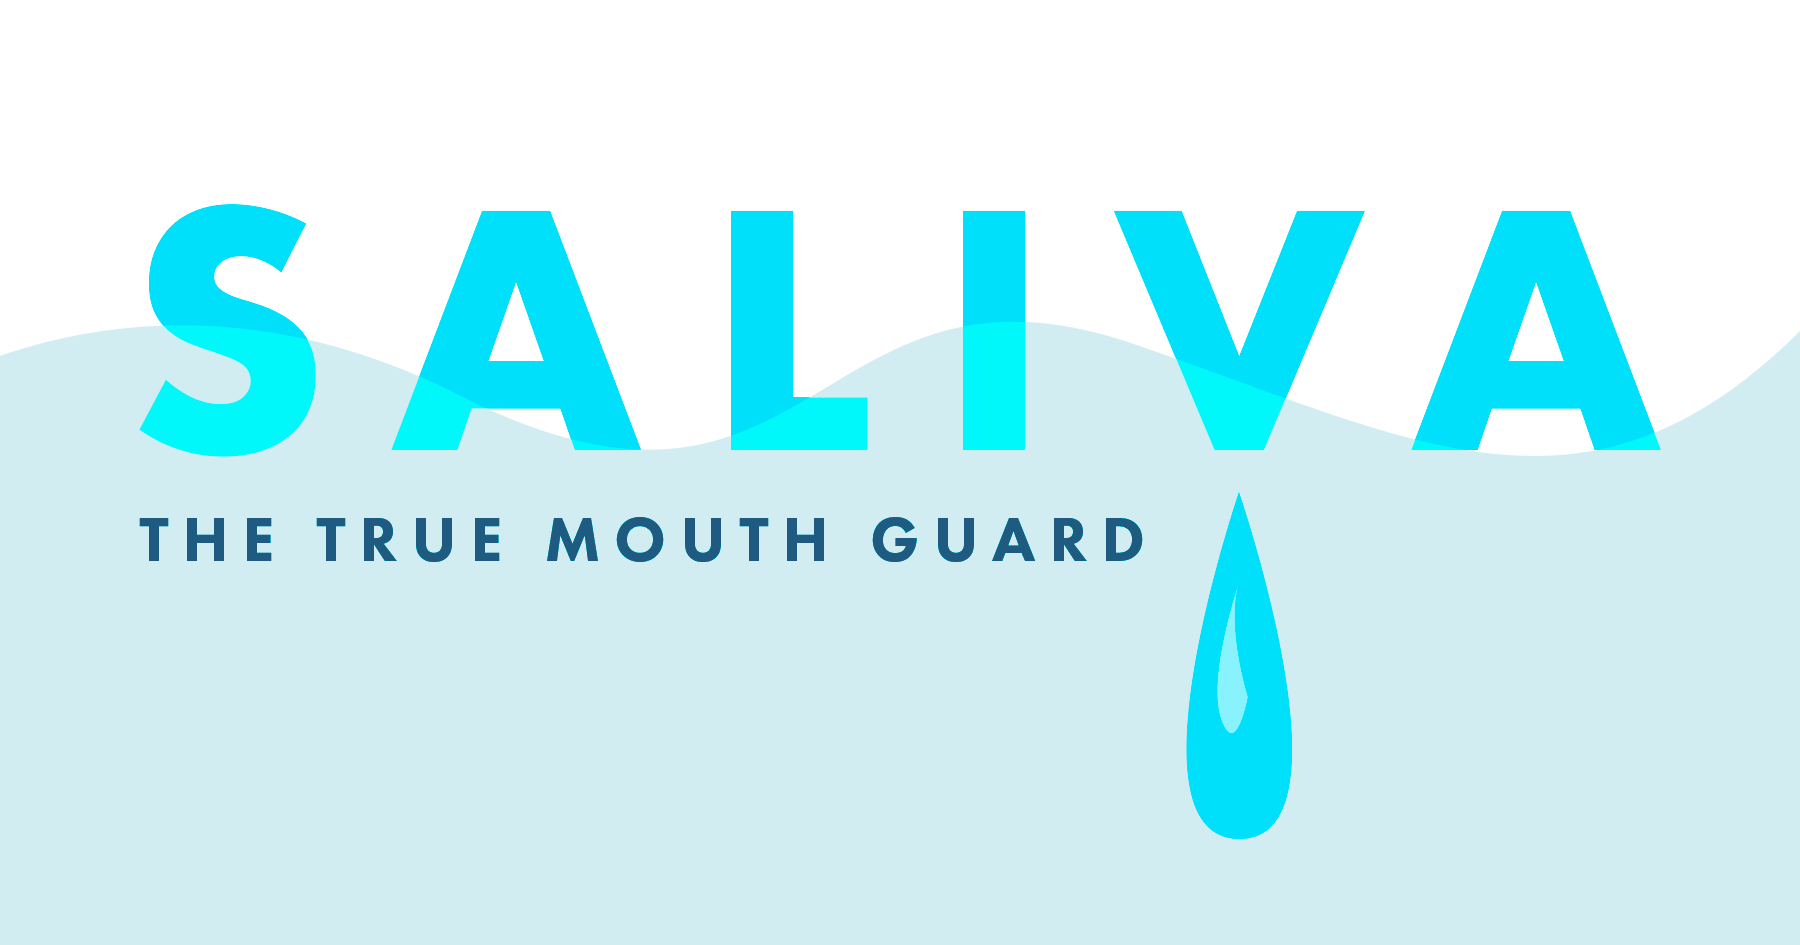 How saliva protects teeth